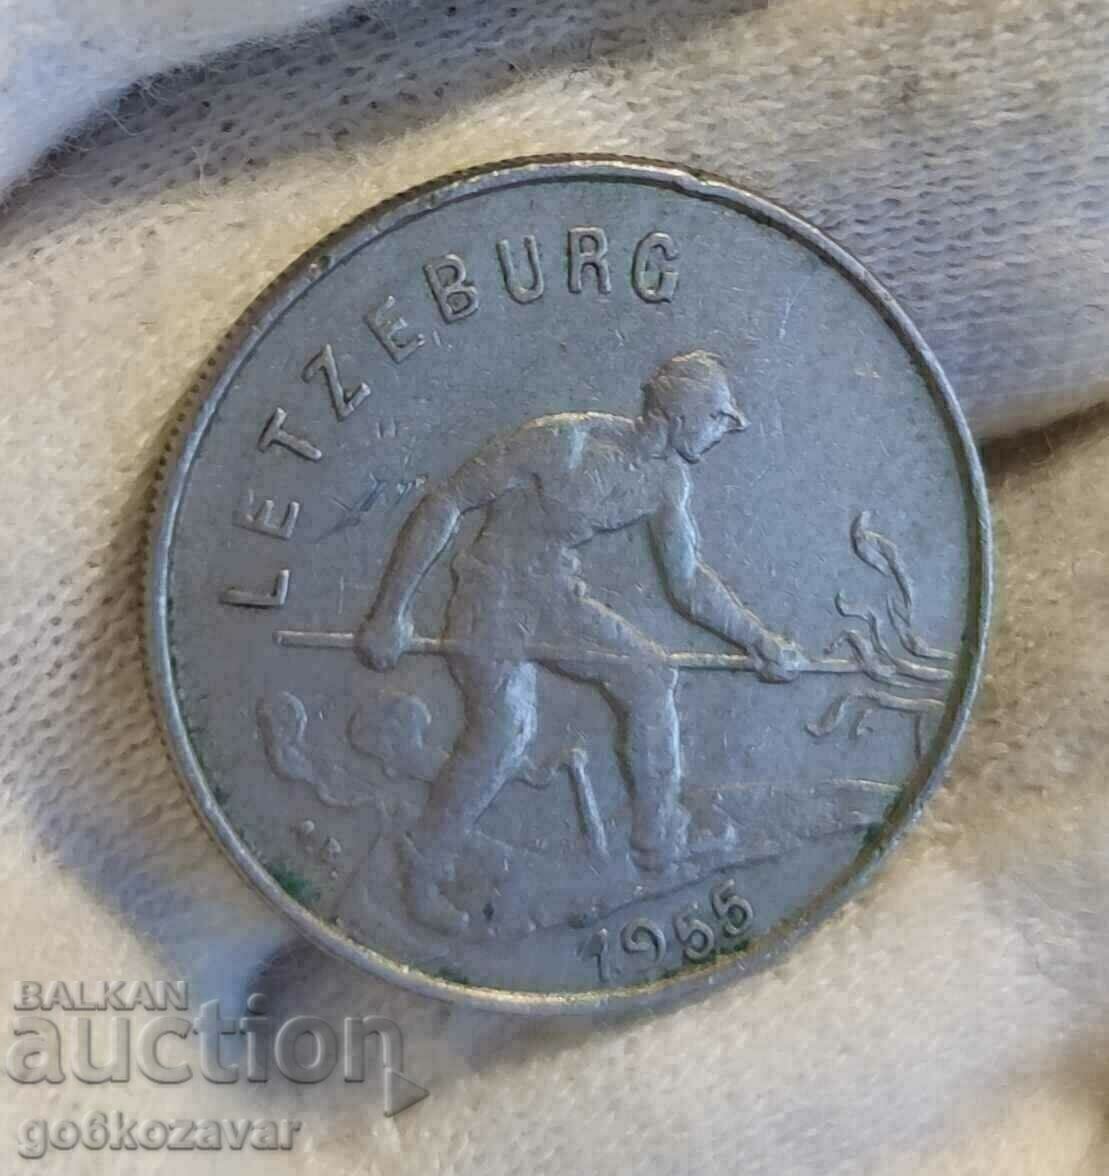 Luxemburg 1 franc 1955